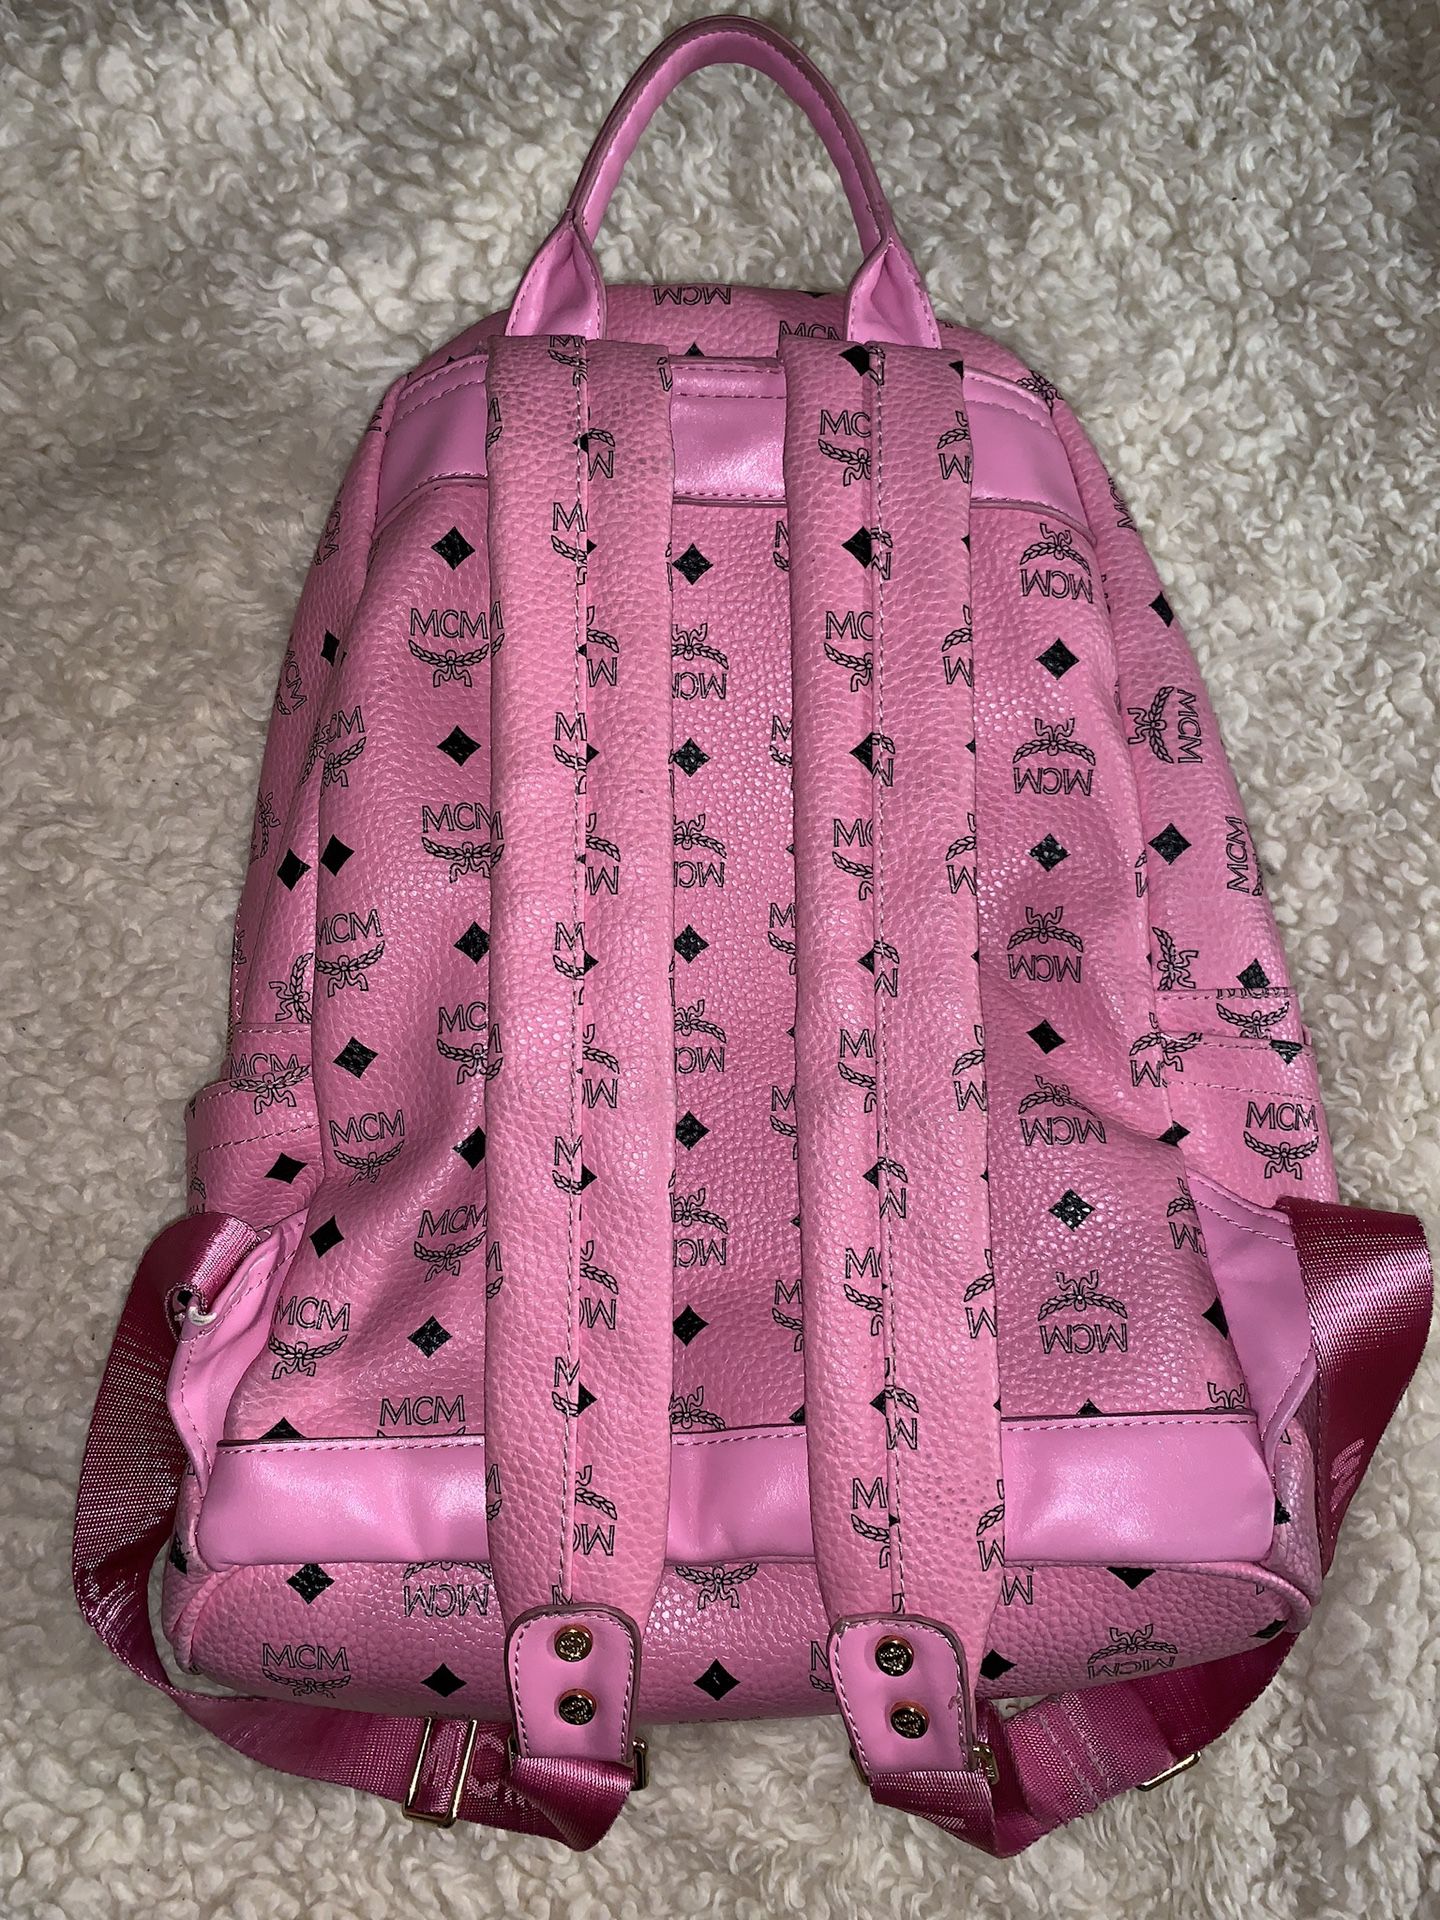 MCM Pink Backpack for Sale in Murrieta, CA - OfferUp